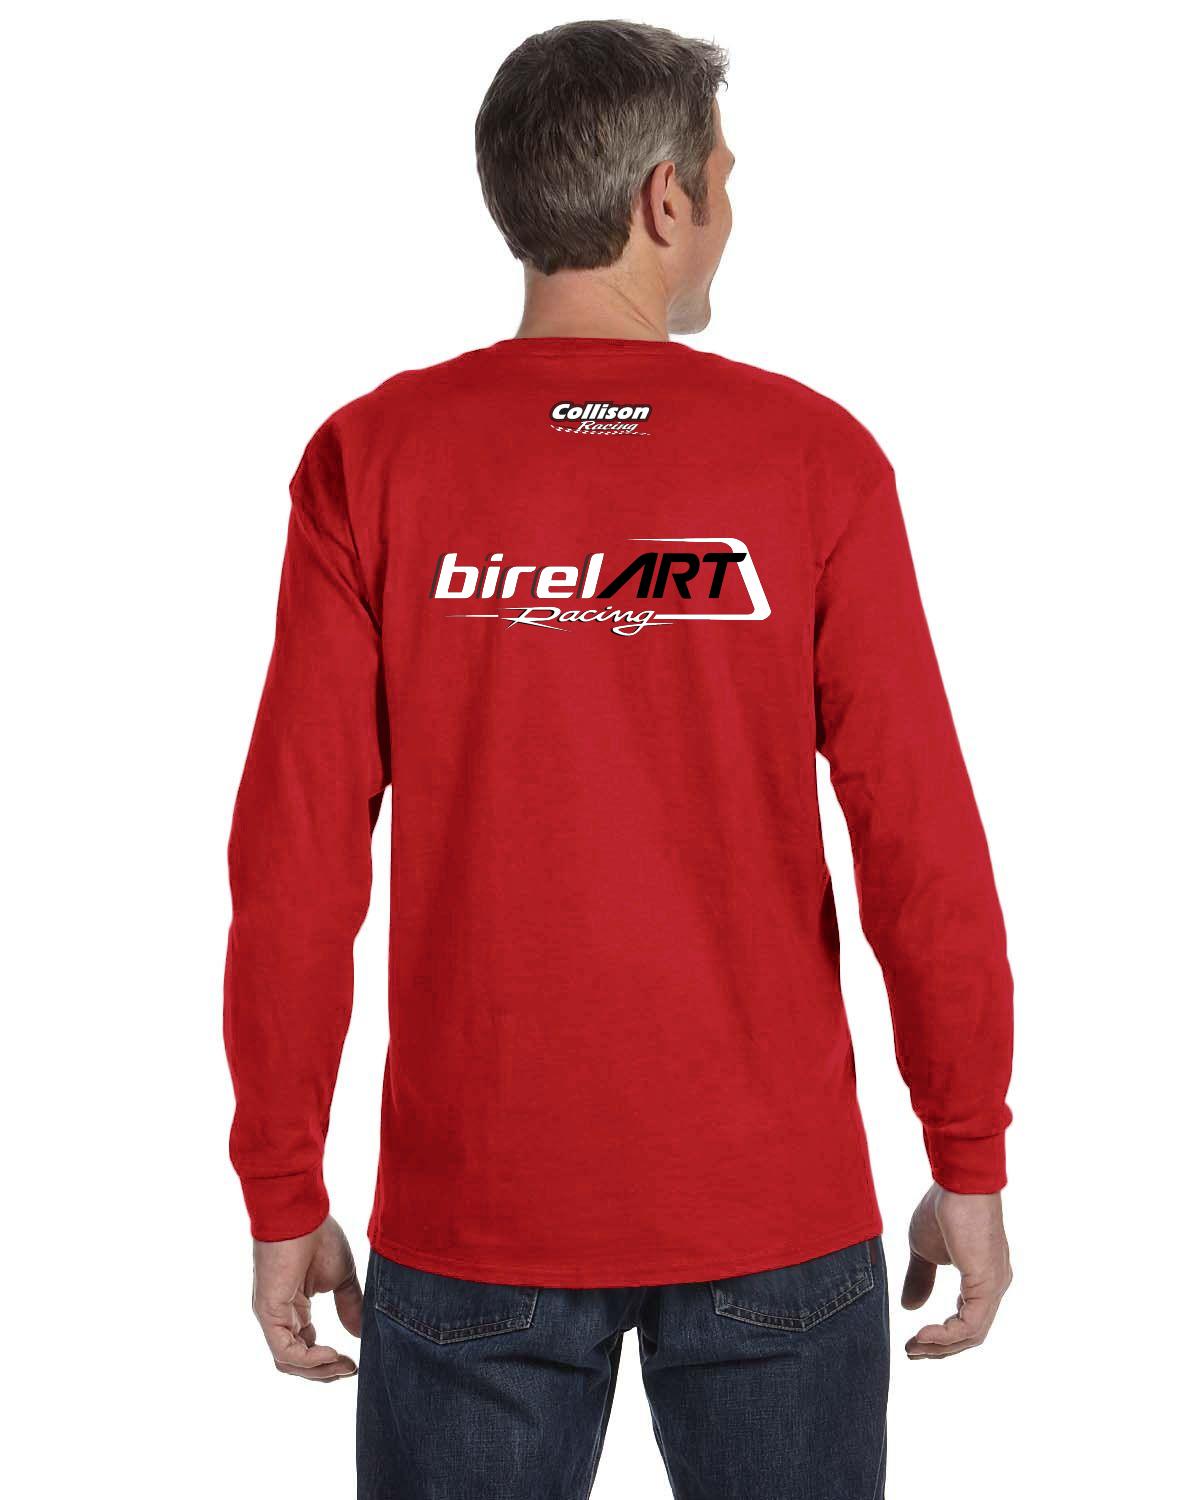 Birel Art Racing Adult long sleeve shirt